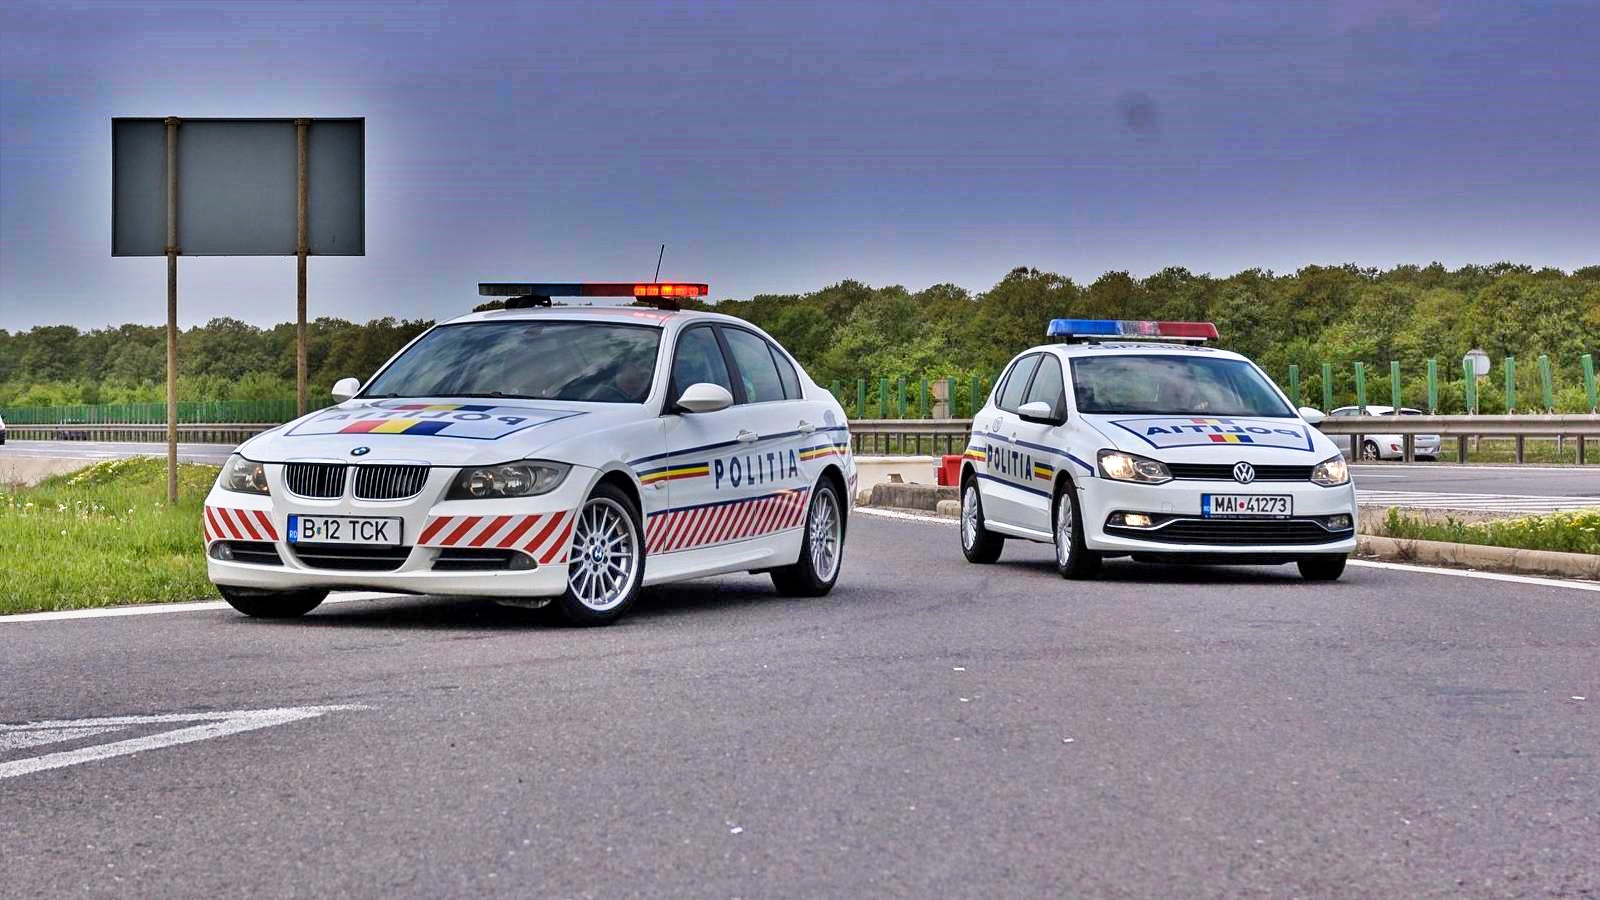 Romanian Police WARNING regarding Car Fraud